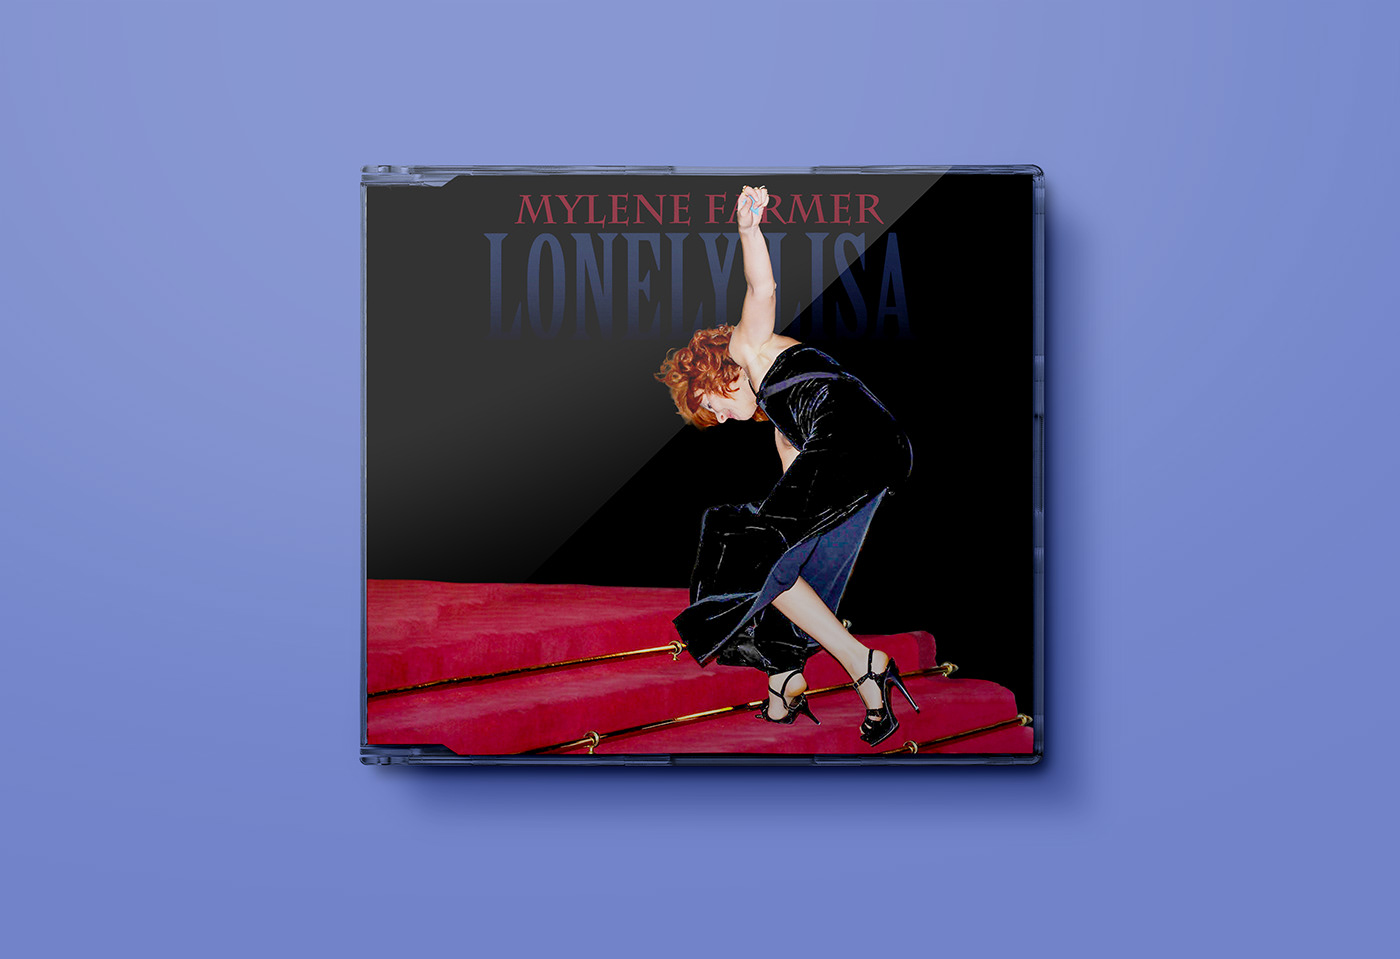 Mylène Farmer Album album cover album art album artwork albumcover CD cover CD design Music Packaging cd